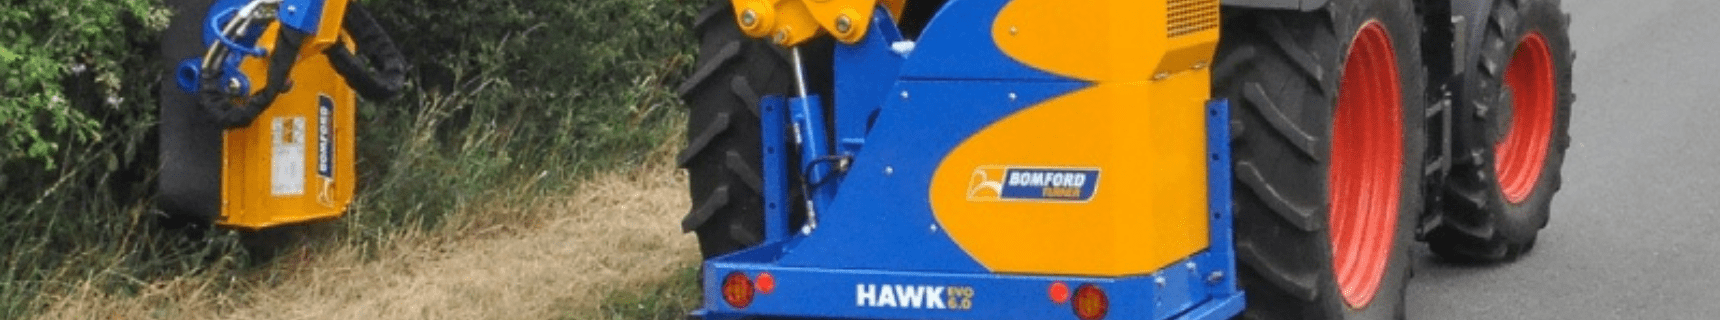 Orsi Hydraulic Reach Mowers – Hedge 160 Head Image